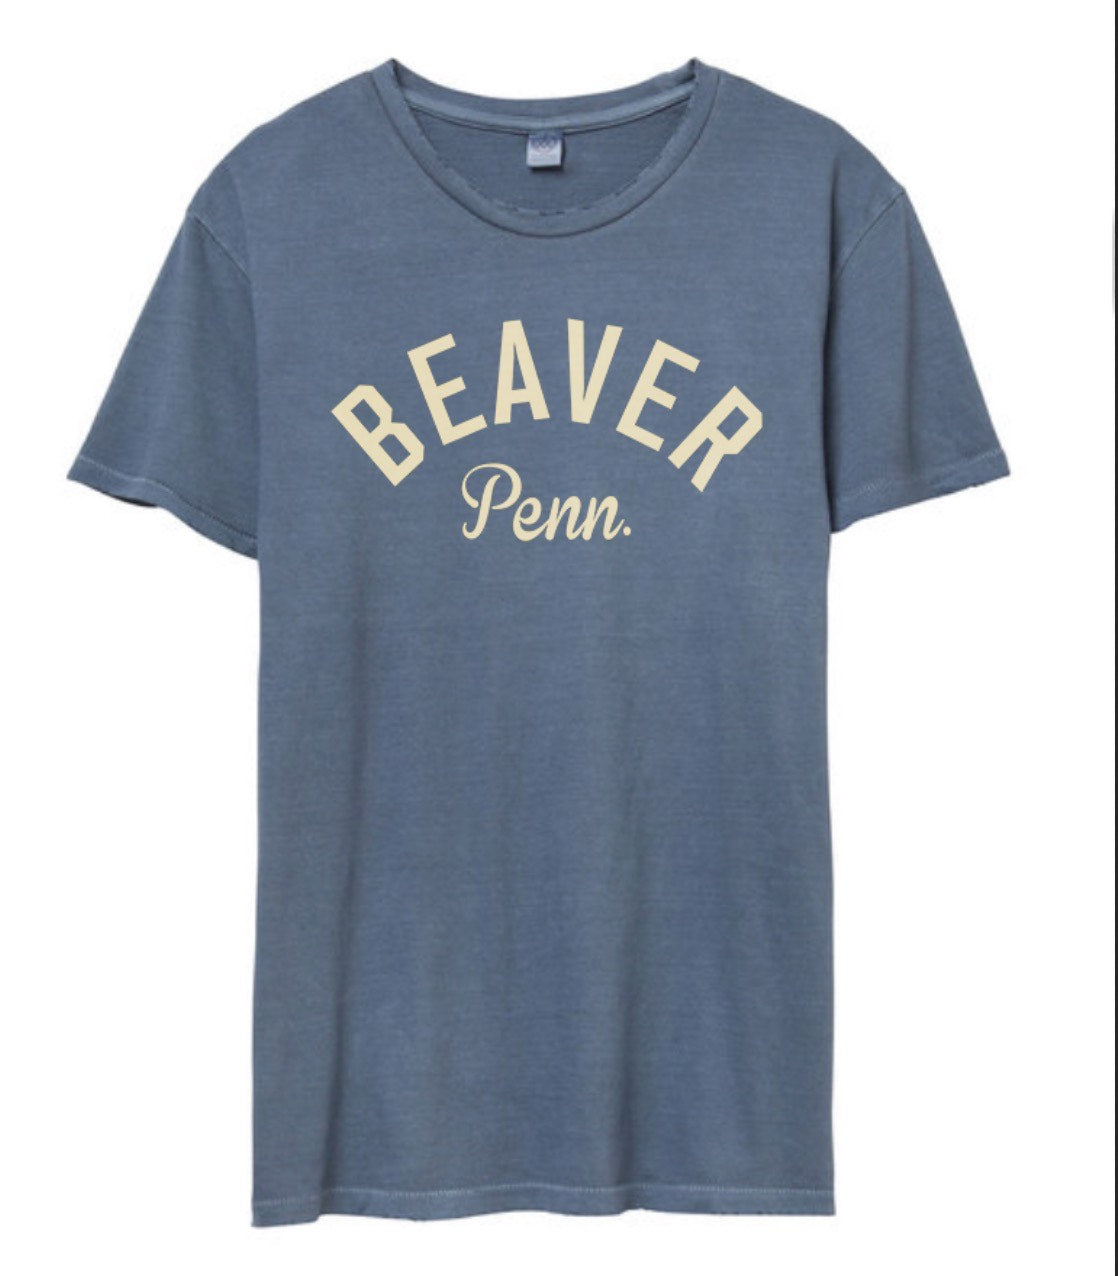 Beaver Penn Tee